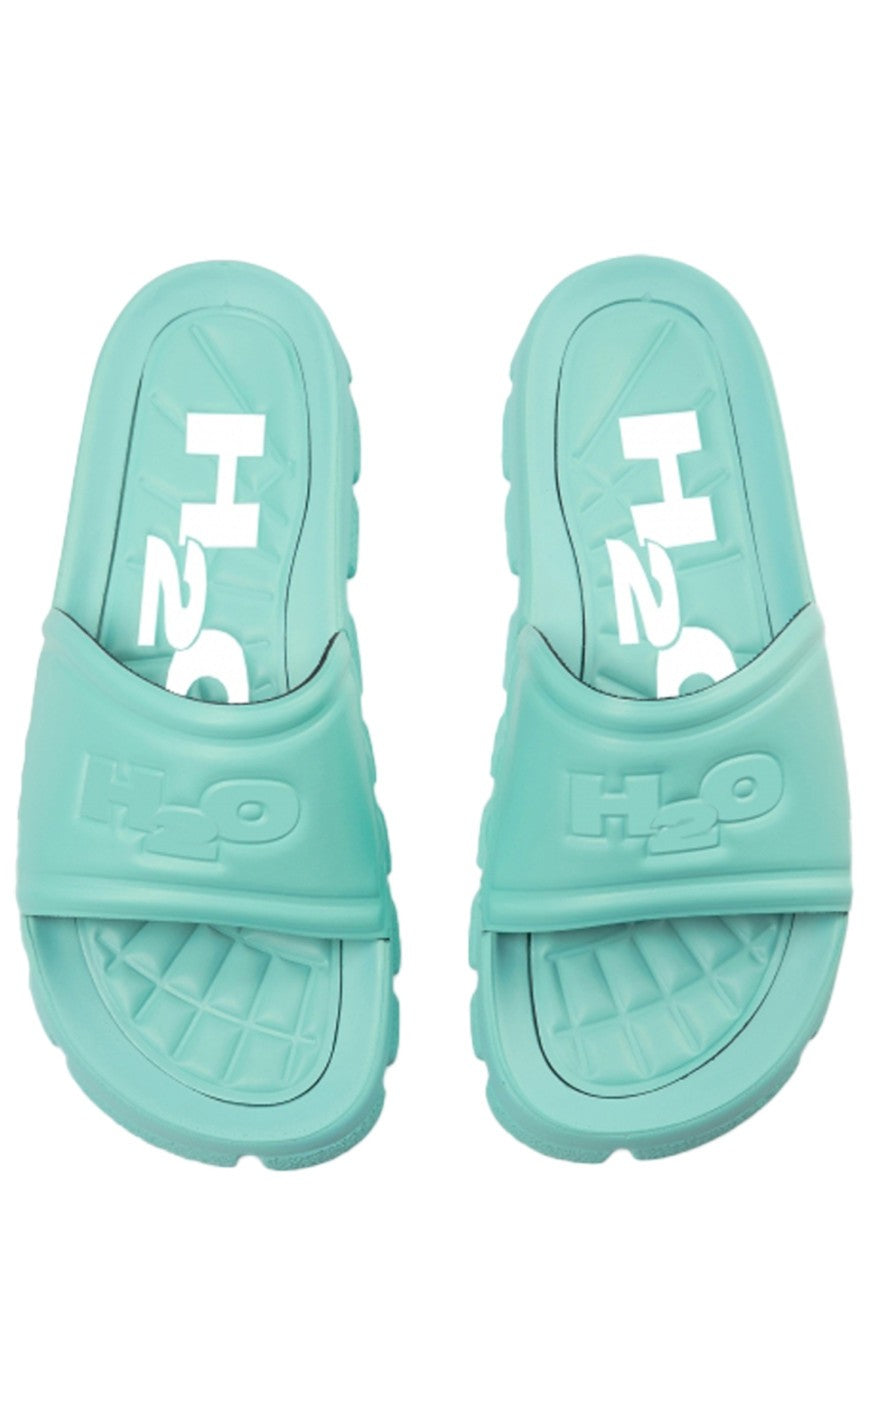 4: H2O Sandal - Trek - Pastel Green